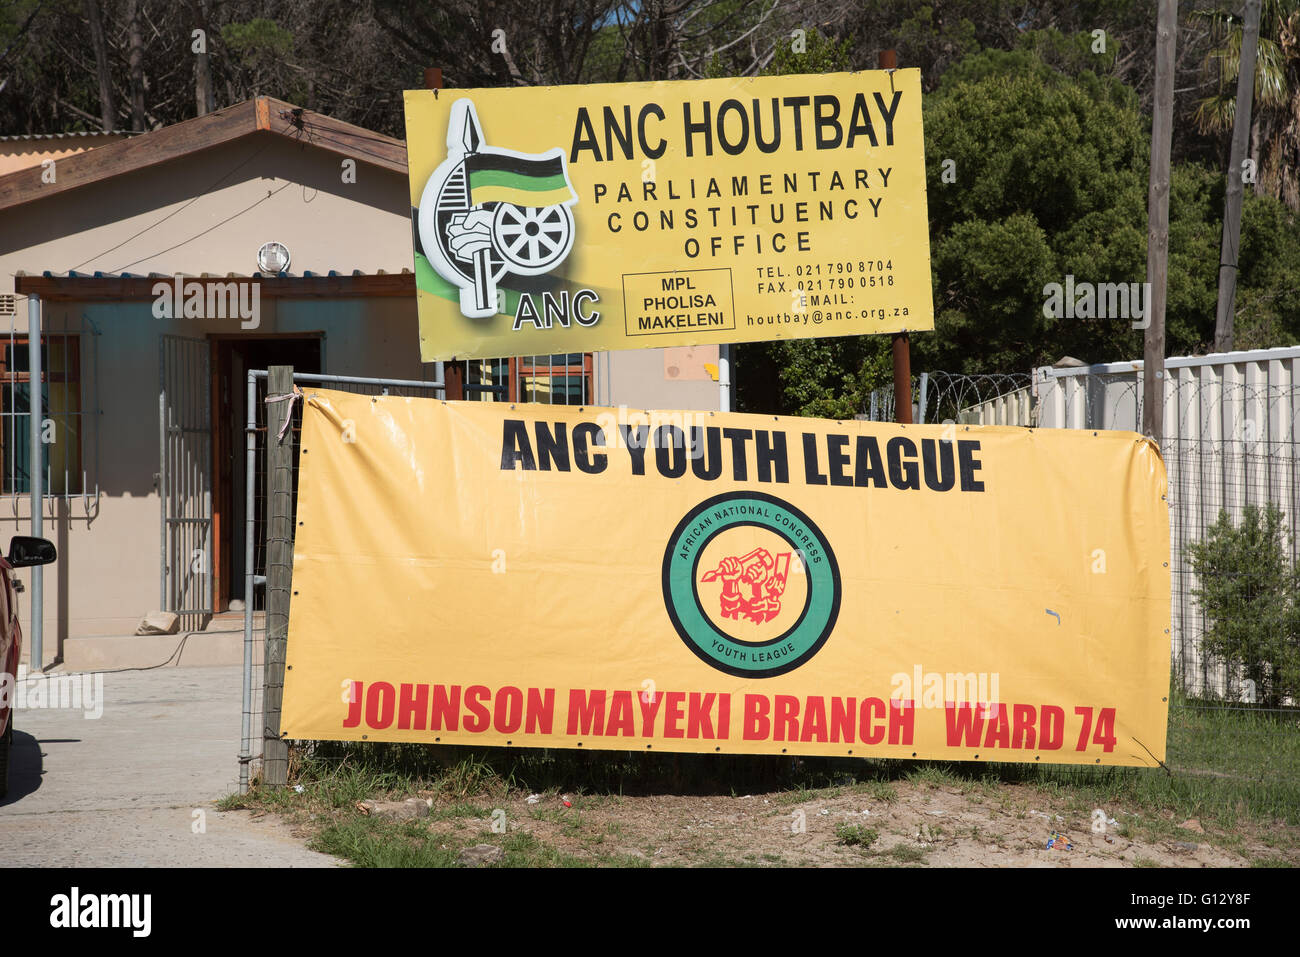 ANC HOUTBAY WESTERN CAPE Südafrika der ANC Partei mit dem ANC Youth League-Büro in Houtbay Südliches Afrika Stockfoto